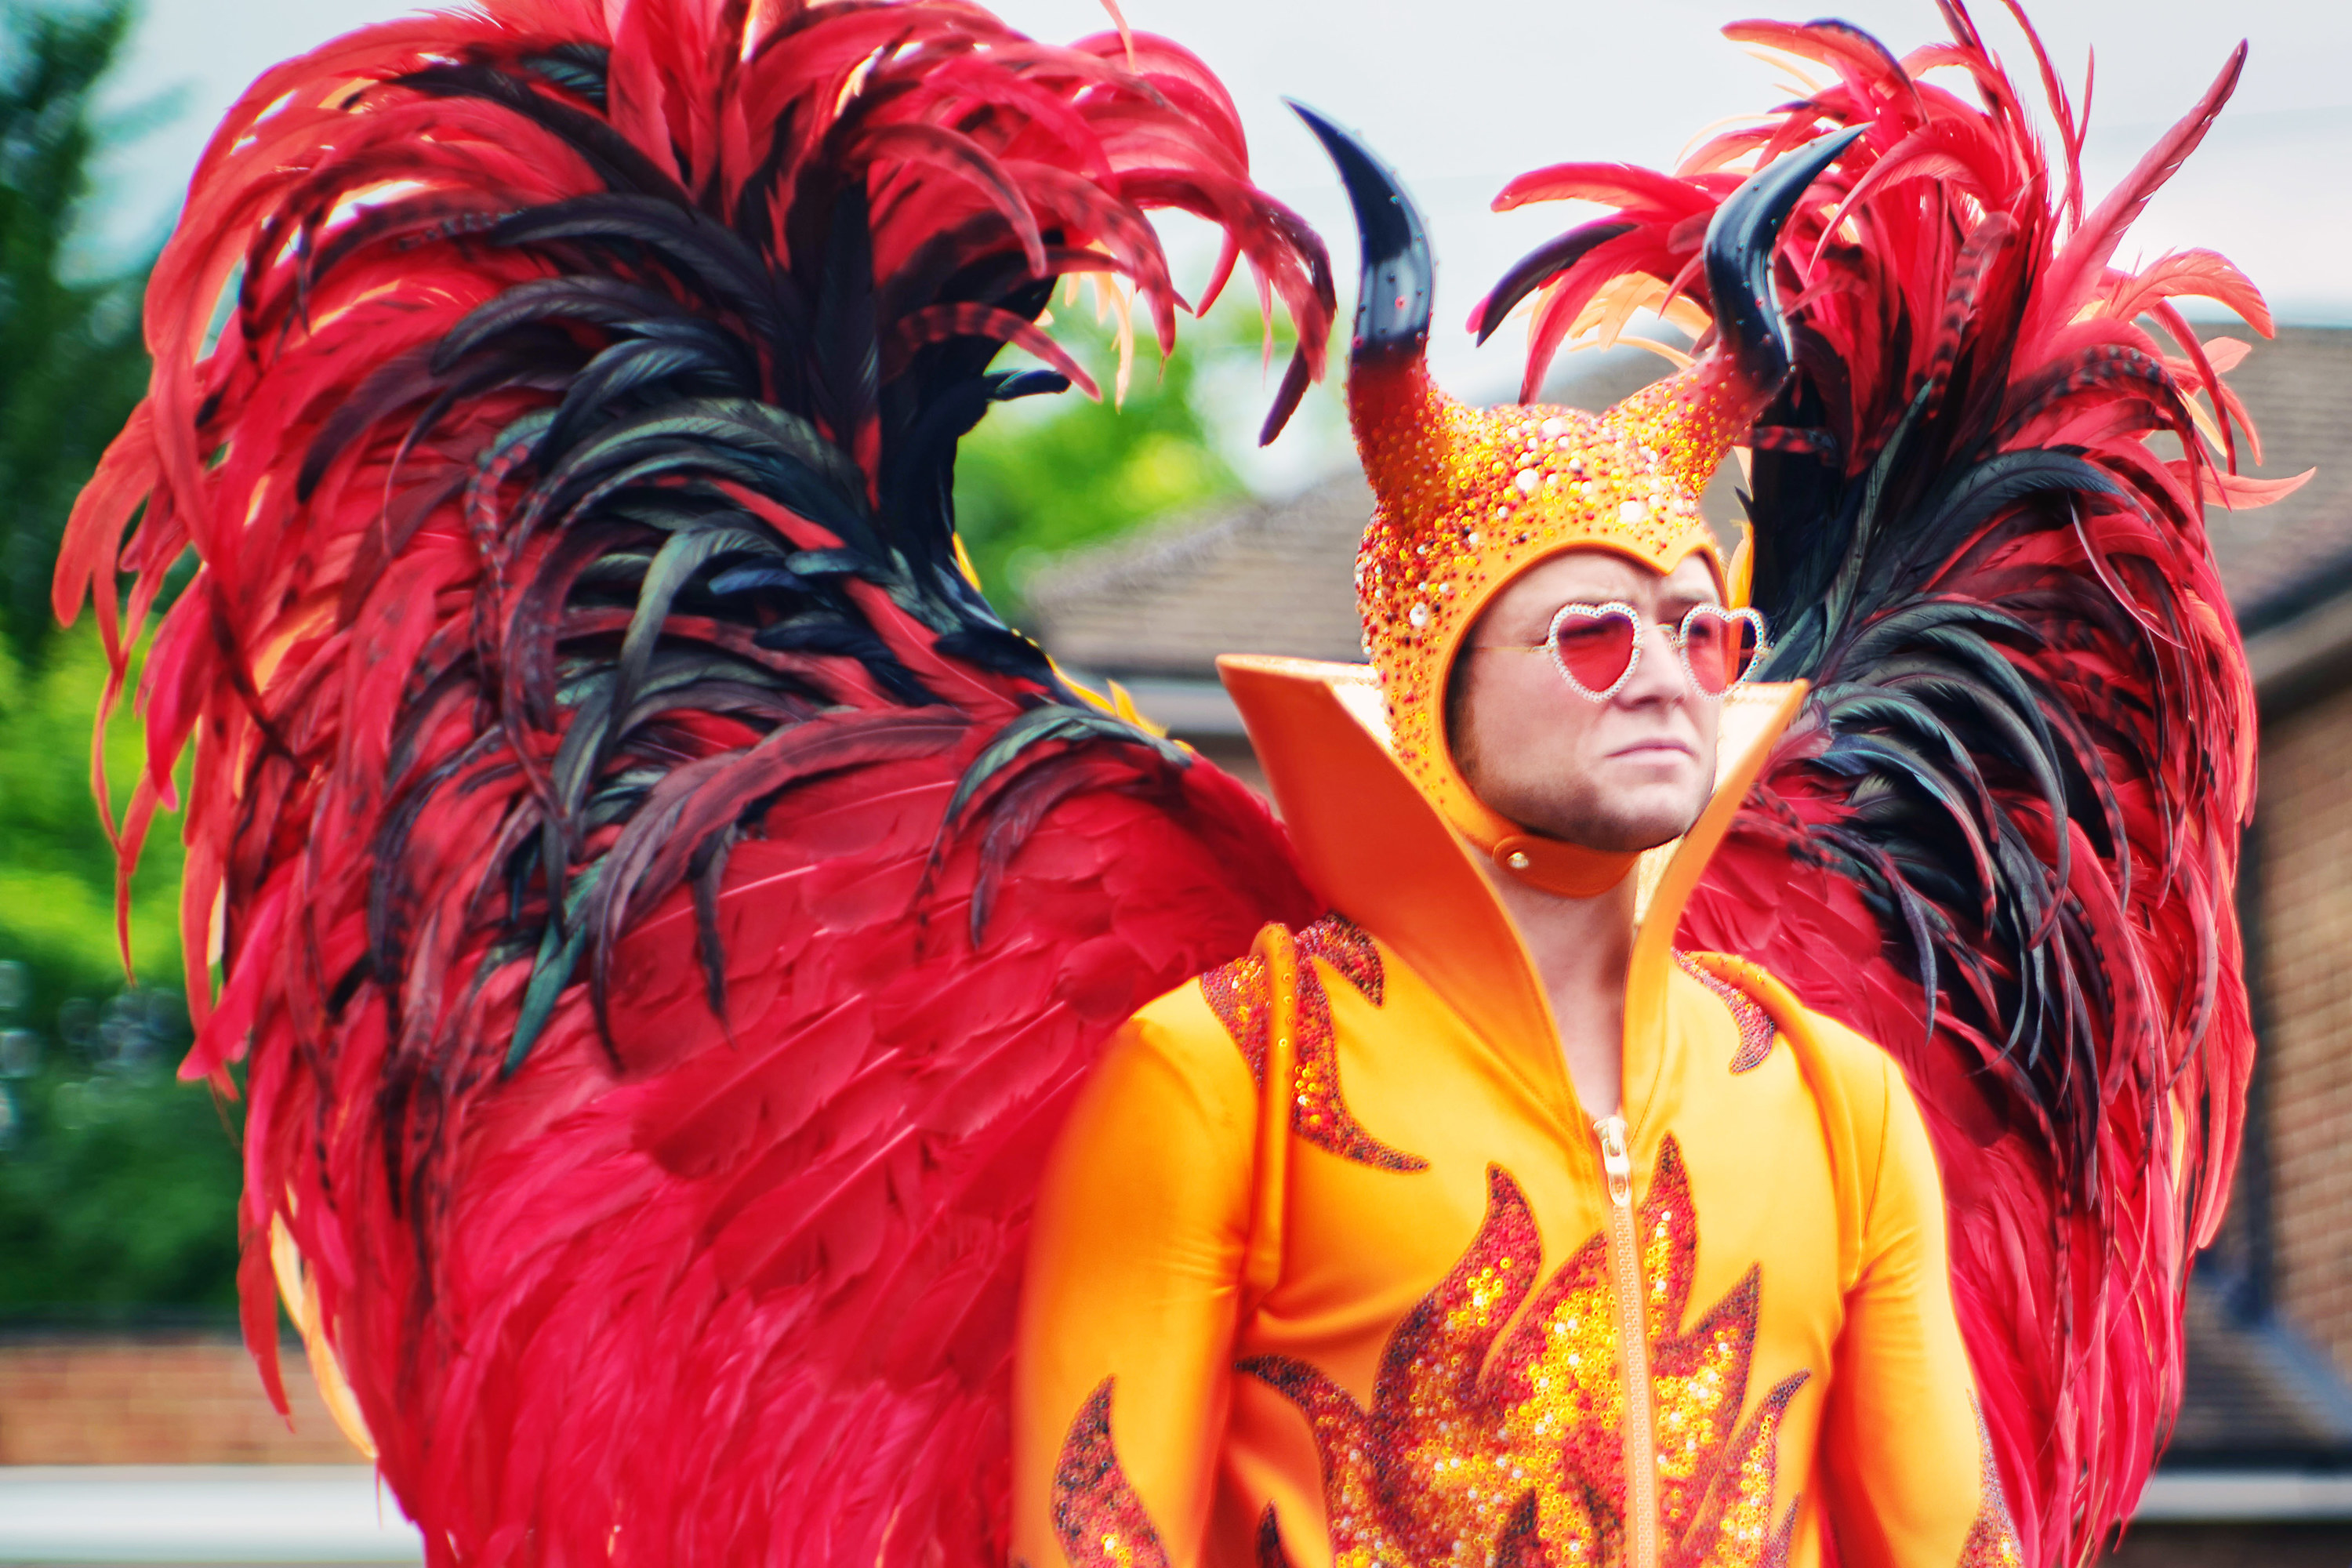 Elton John in an elaborate winged costume